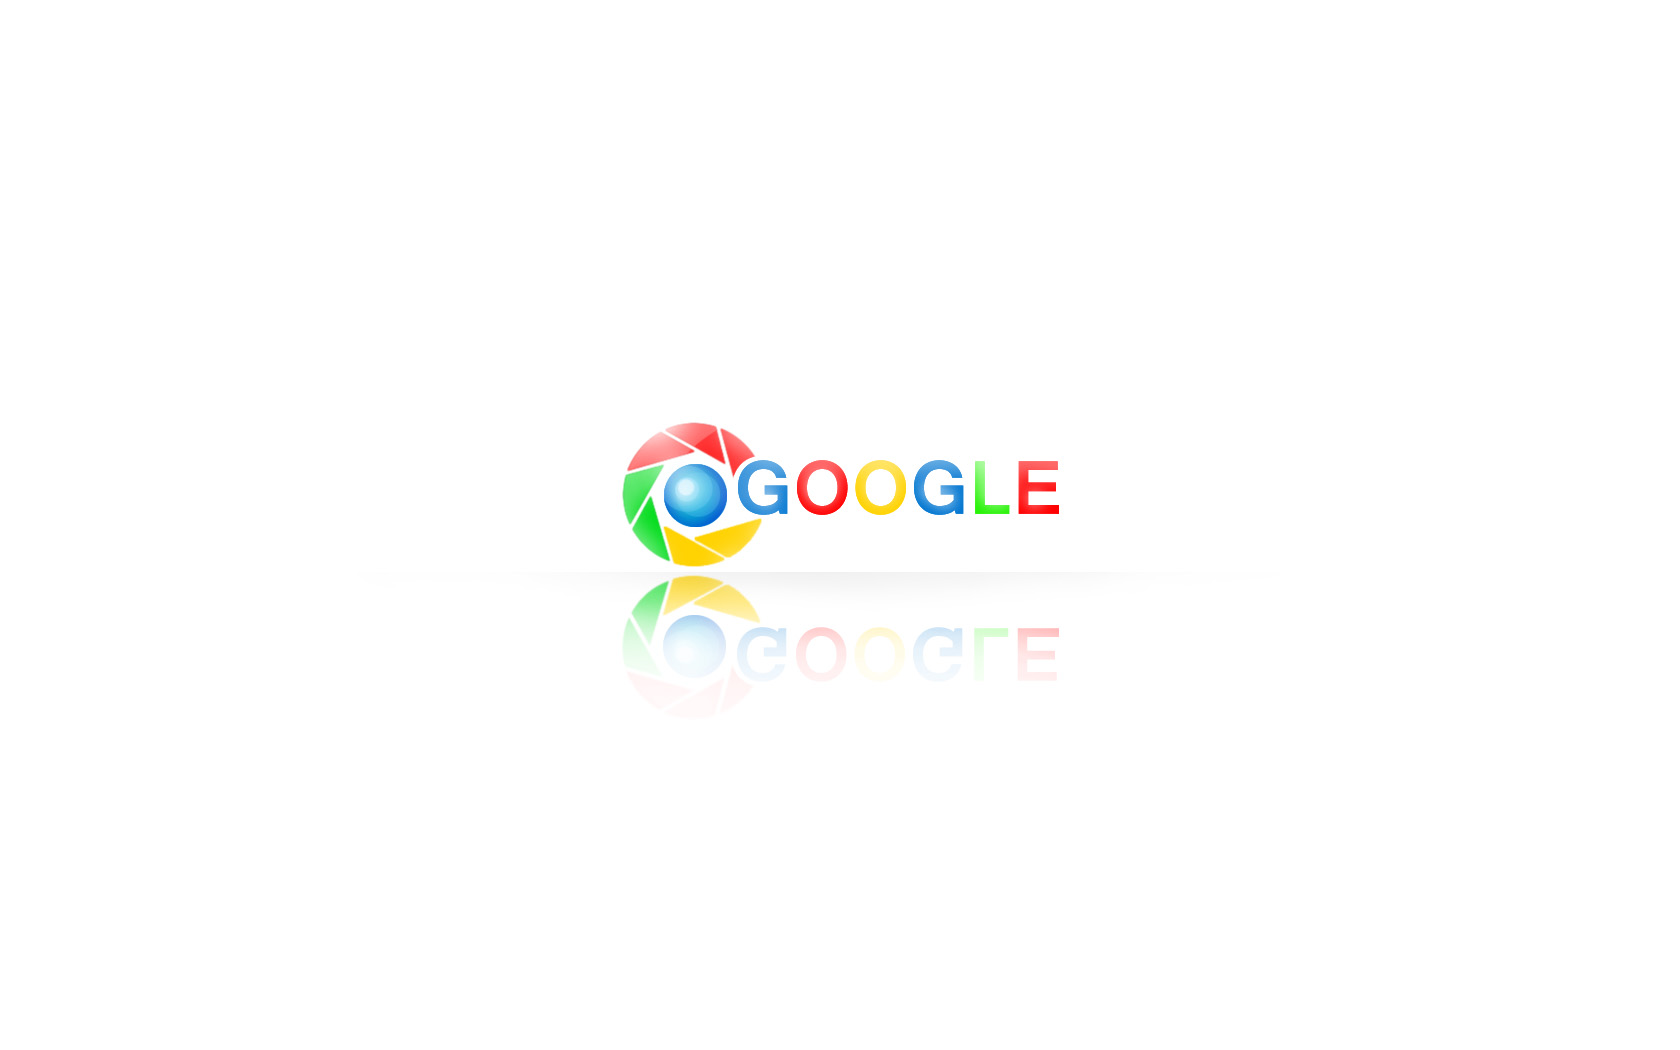 Chrome Google Wallpaper HD